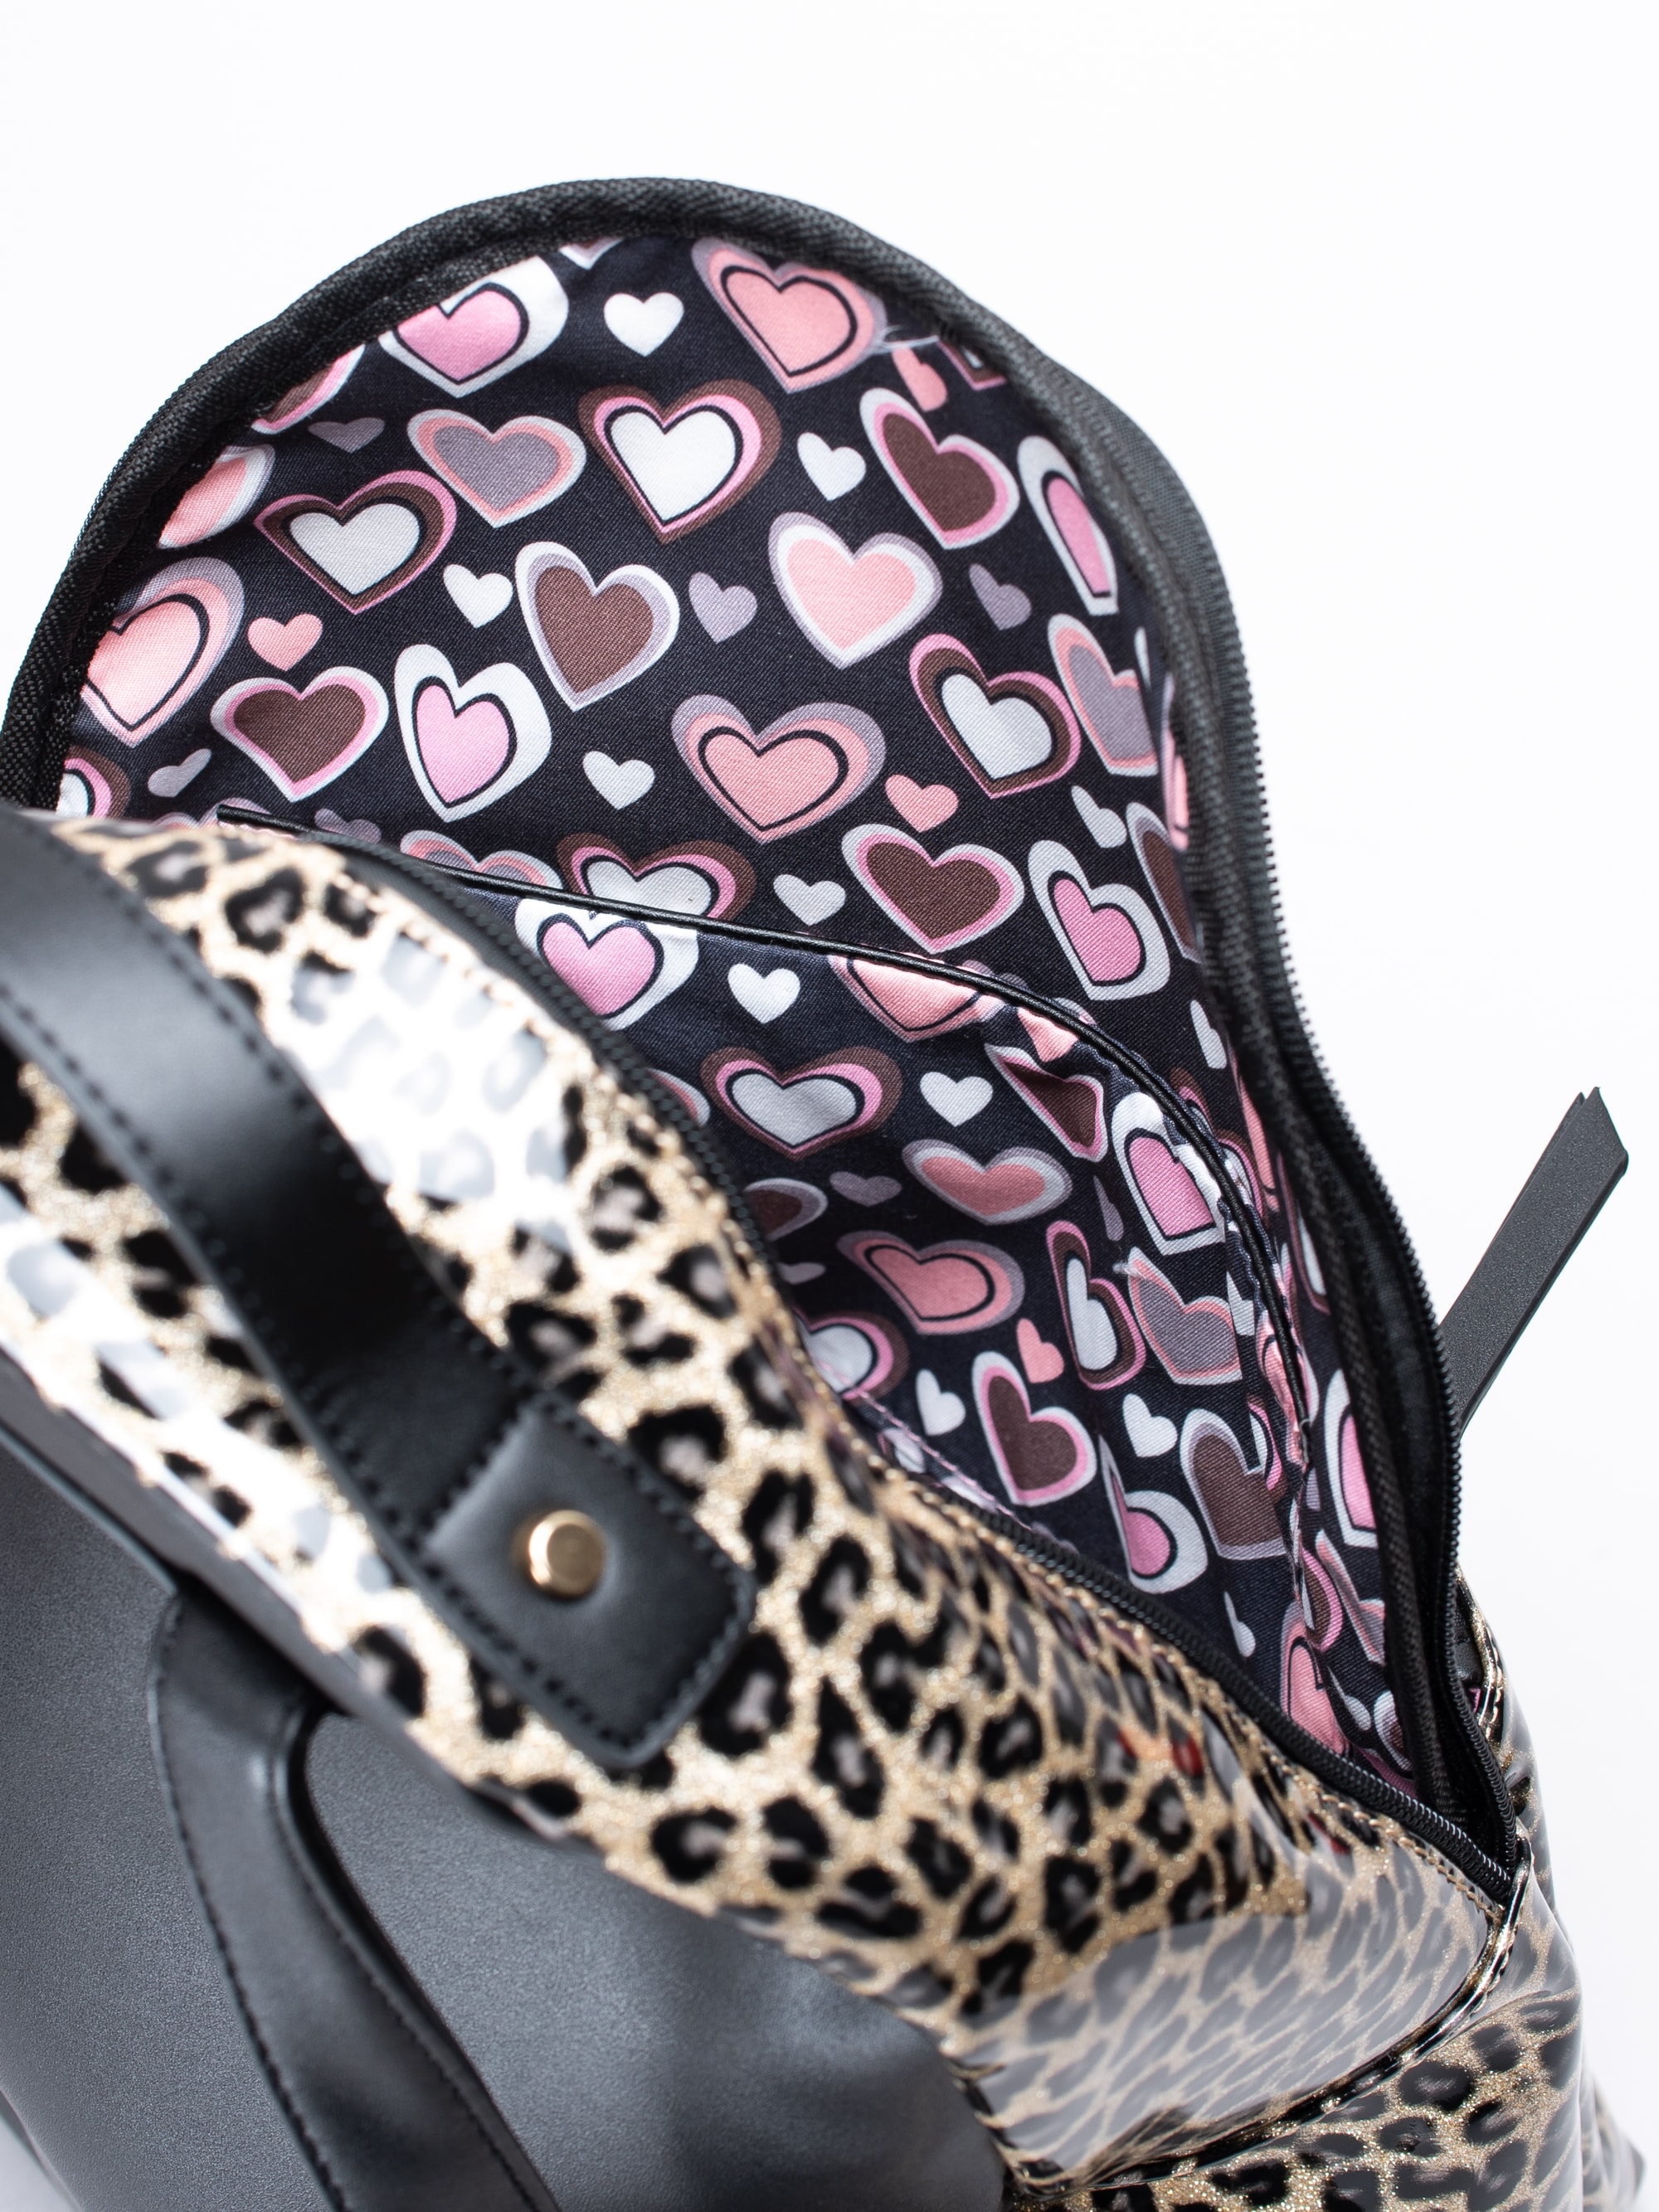 86193024 Ulrika Design 36-5411-7 Wild Kids guld glittrig leopard mönstrad ryggsäck för barn-6